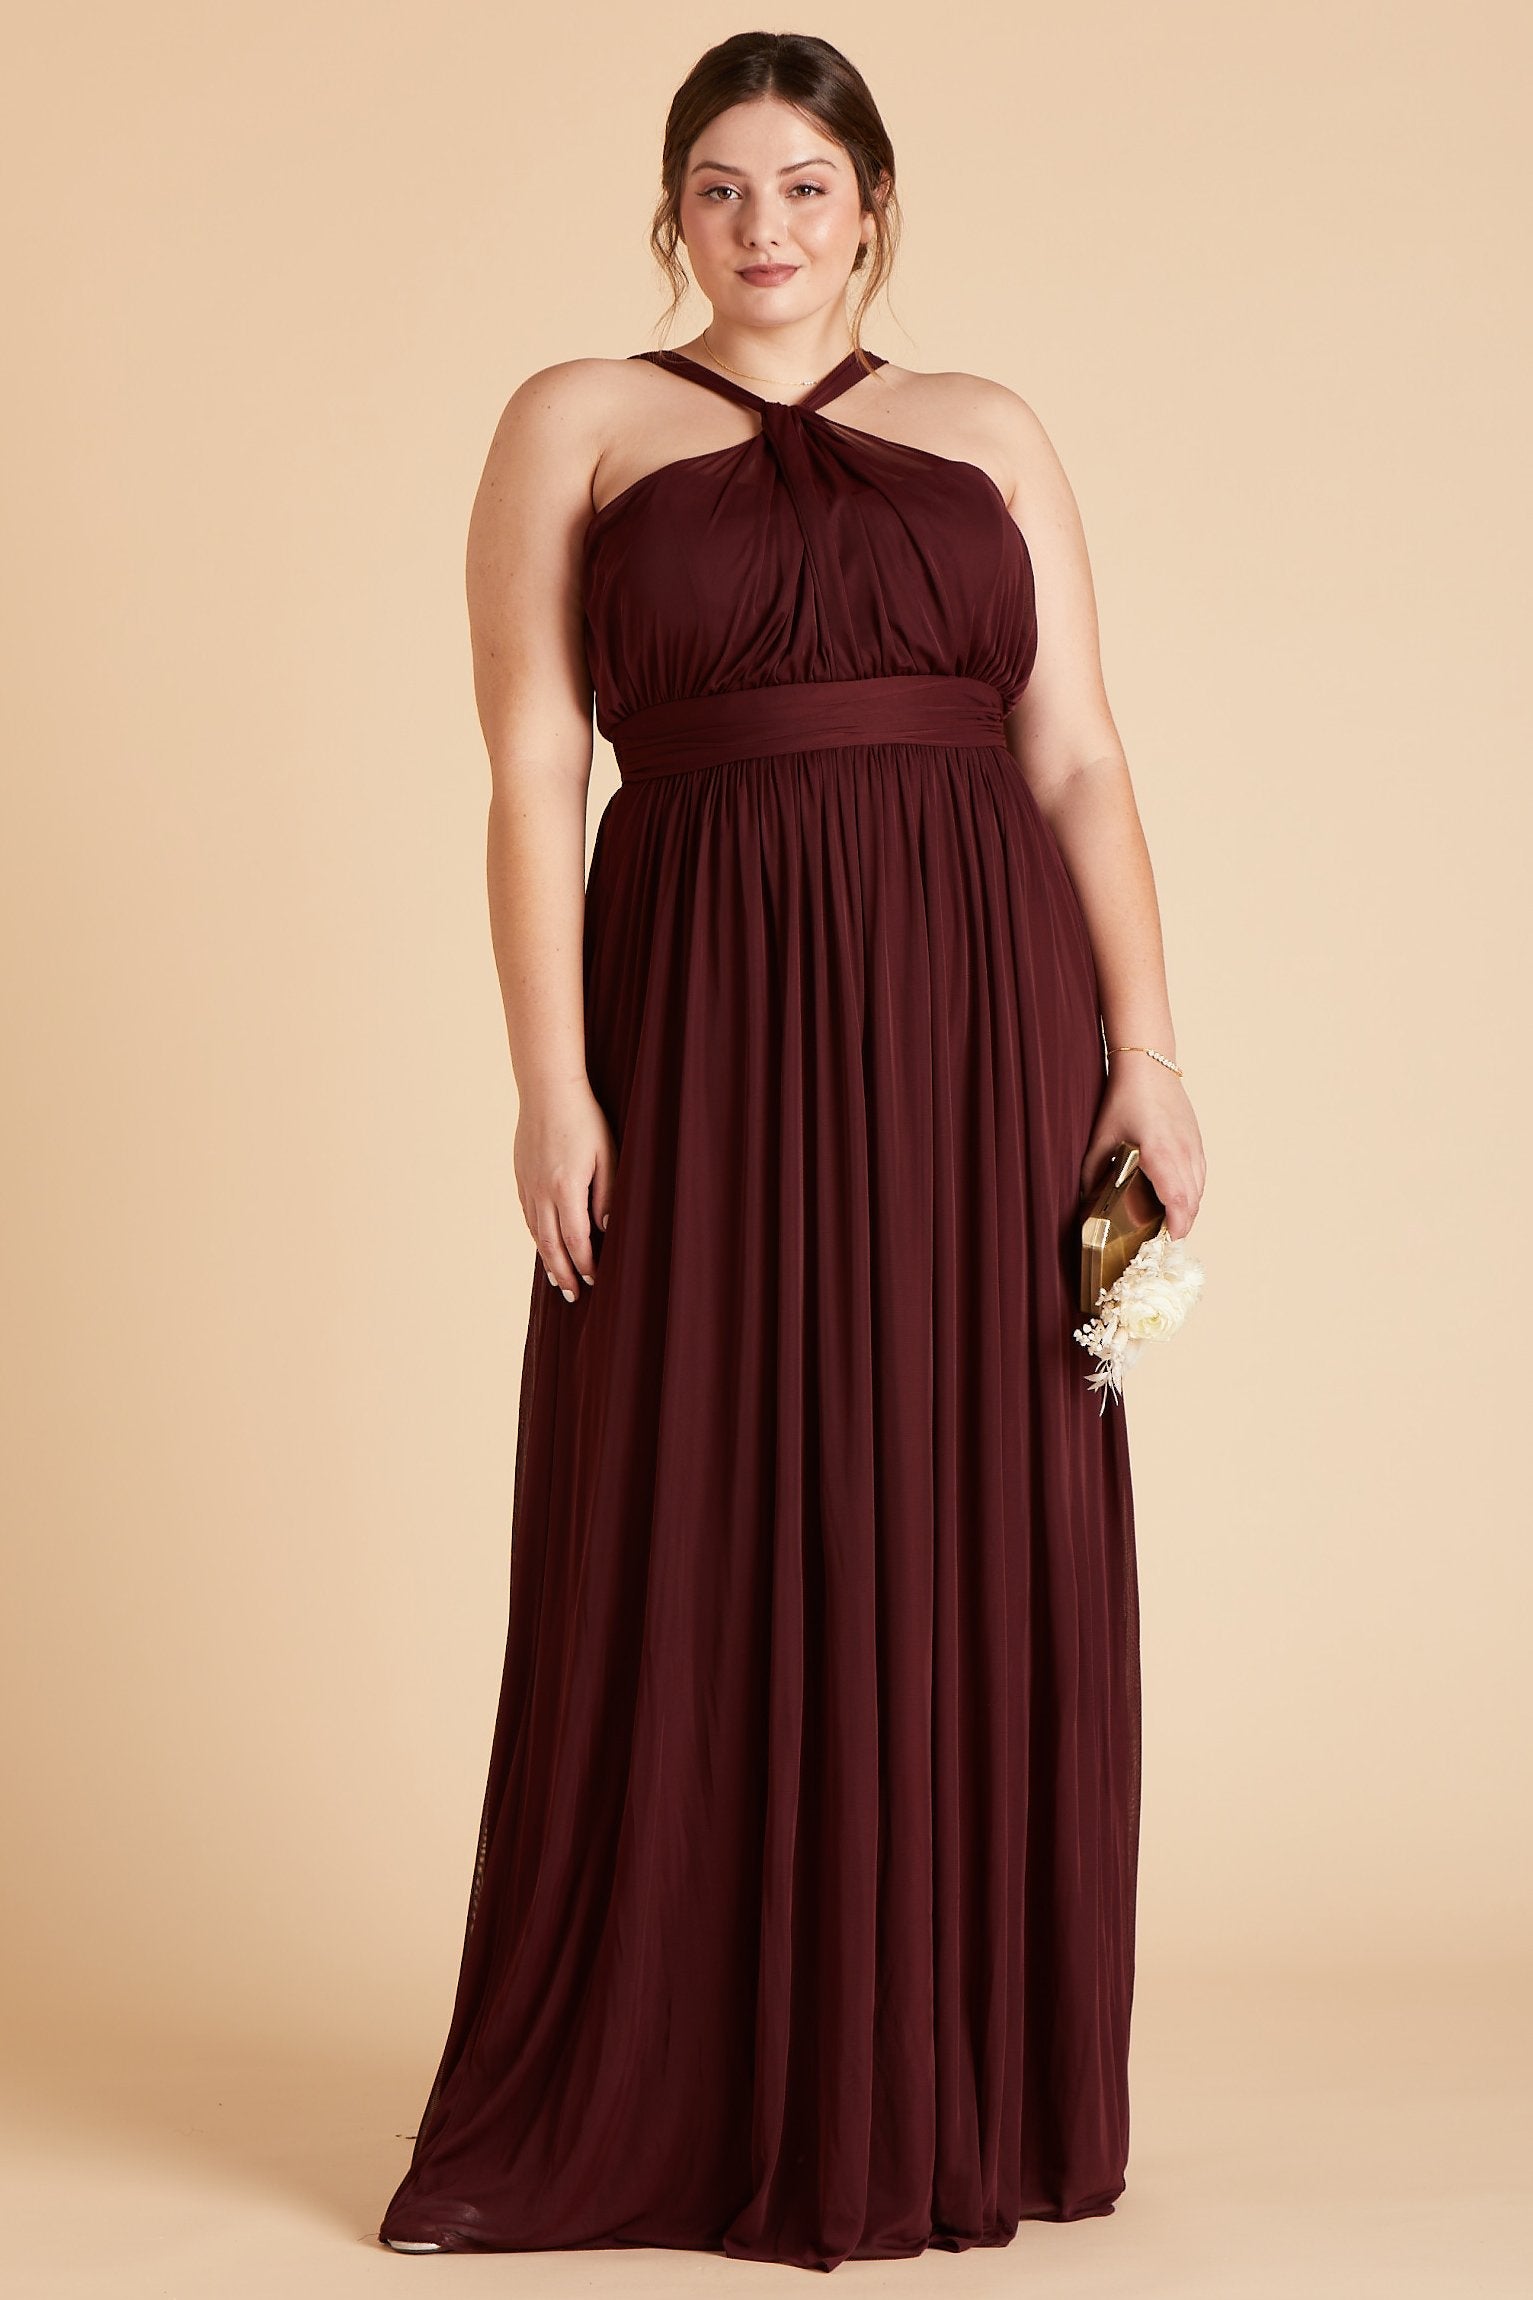 Kiko plus size bridesmaid dress in cabernet burgundy chiffon by Birdy Grey, front view